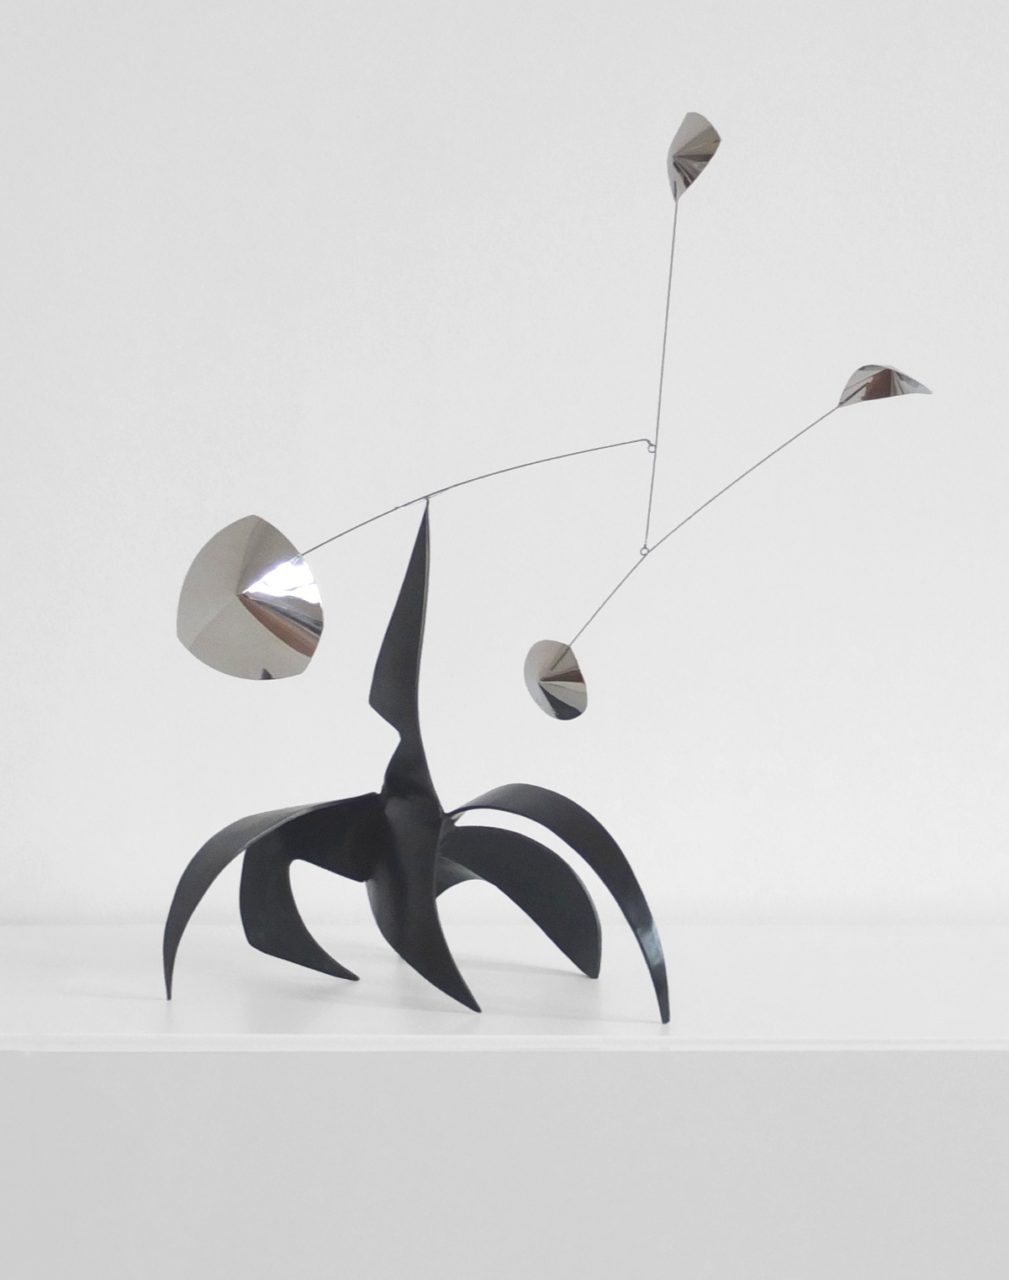 Alex Palenski stabile Louisinox sculpture cinétique mobile